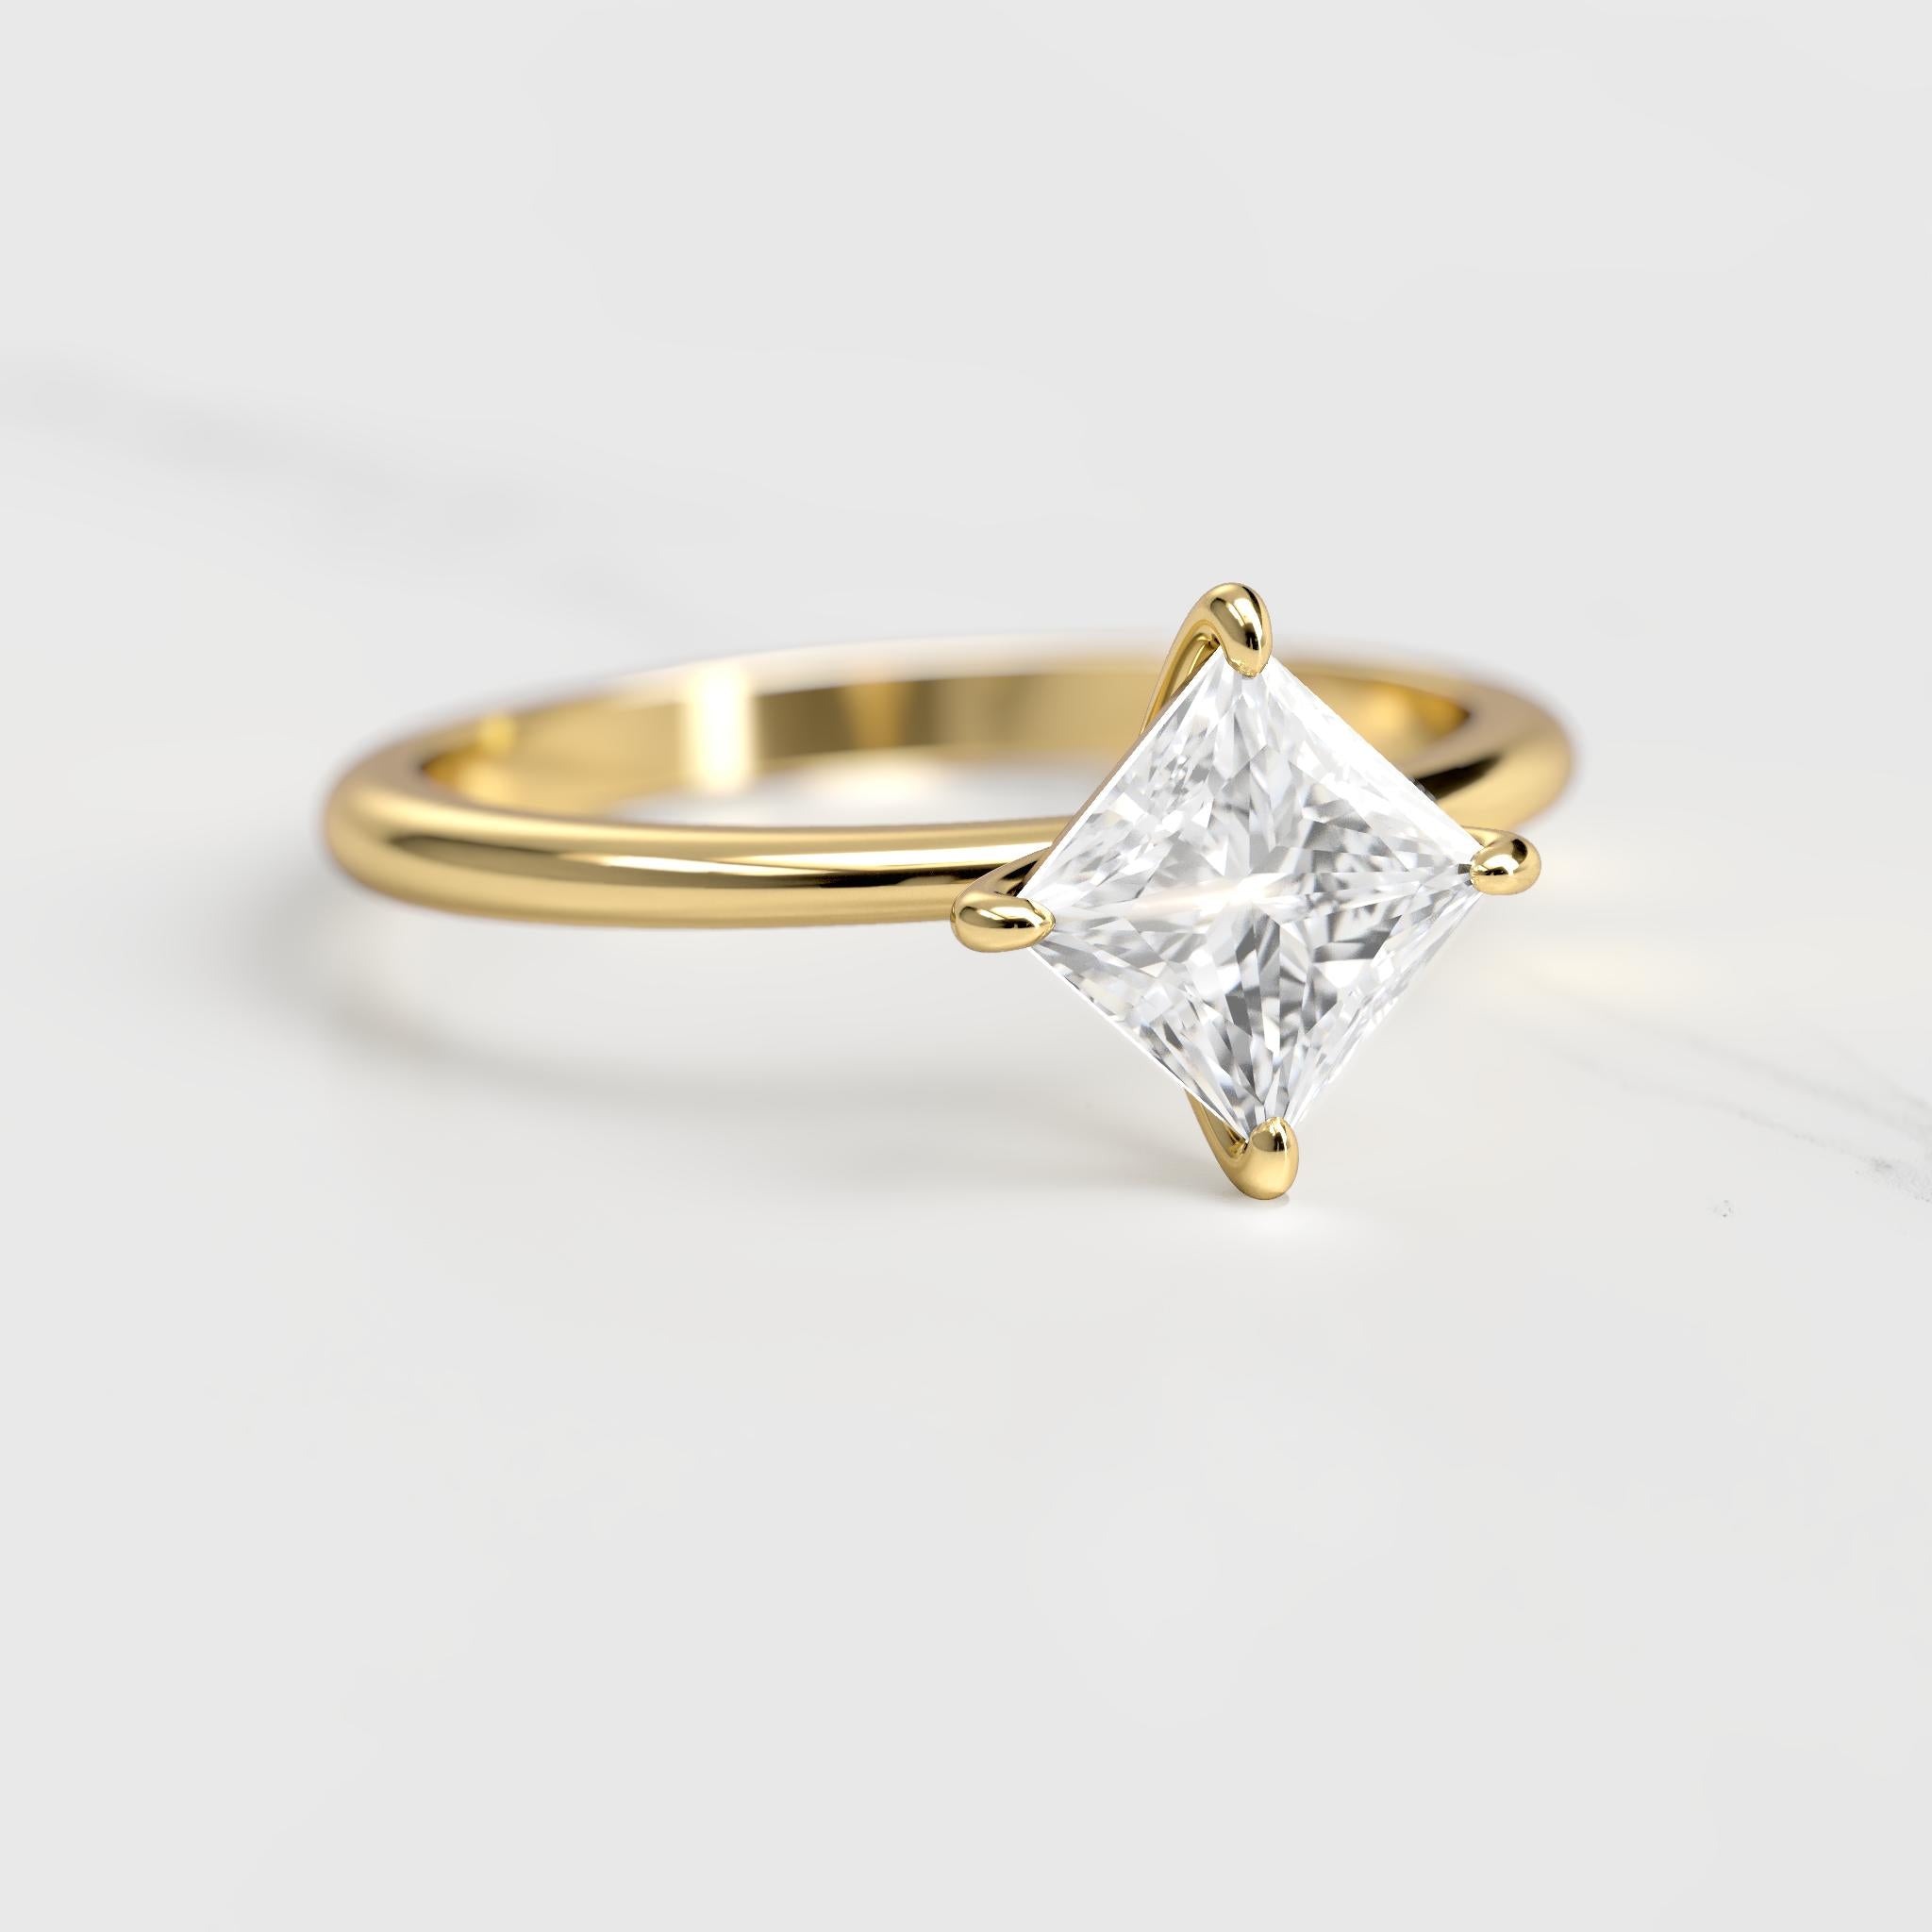 Princess Tapered Solitaire Diamond Ring - 14k rose gold / 0.75ct / natural diamond